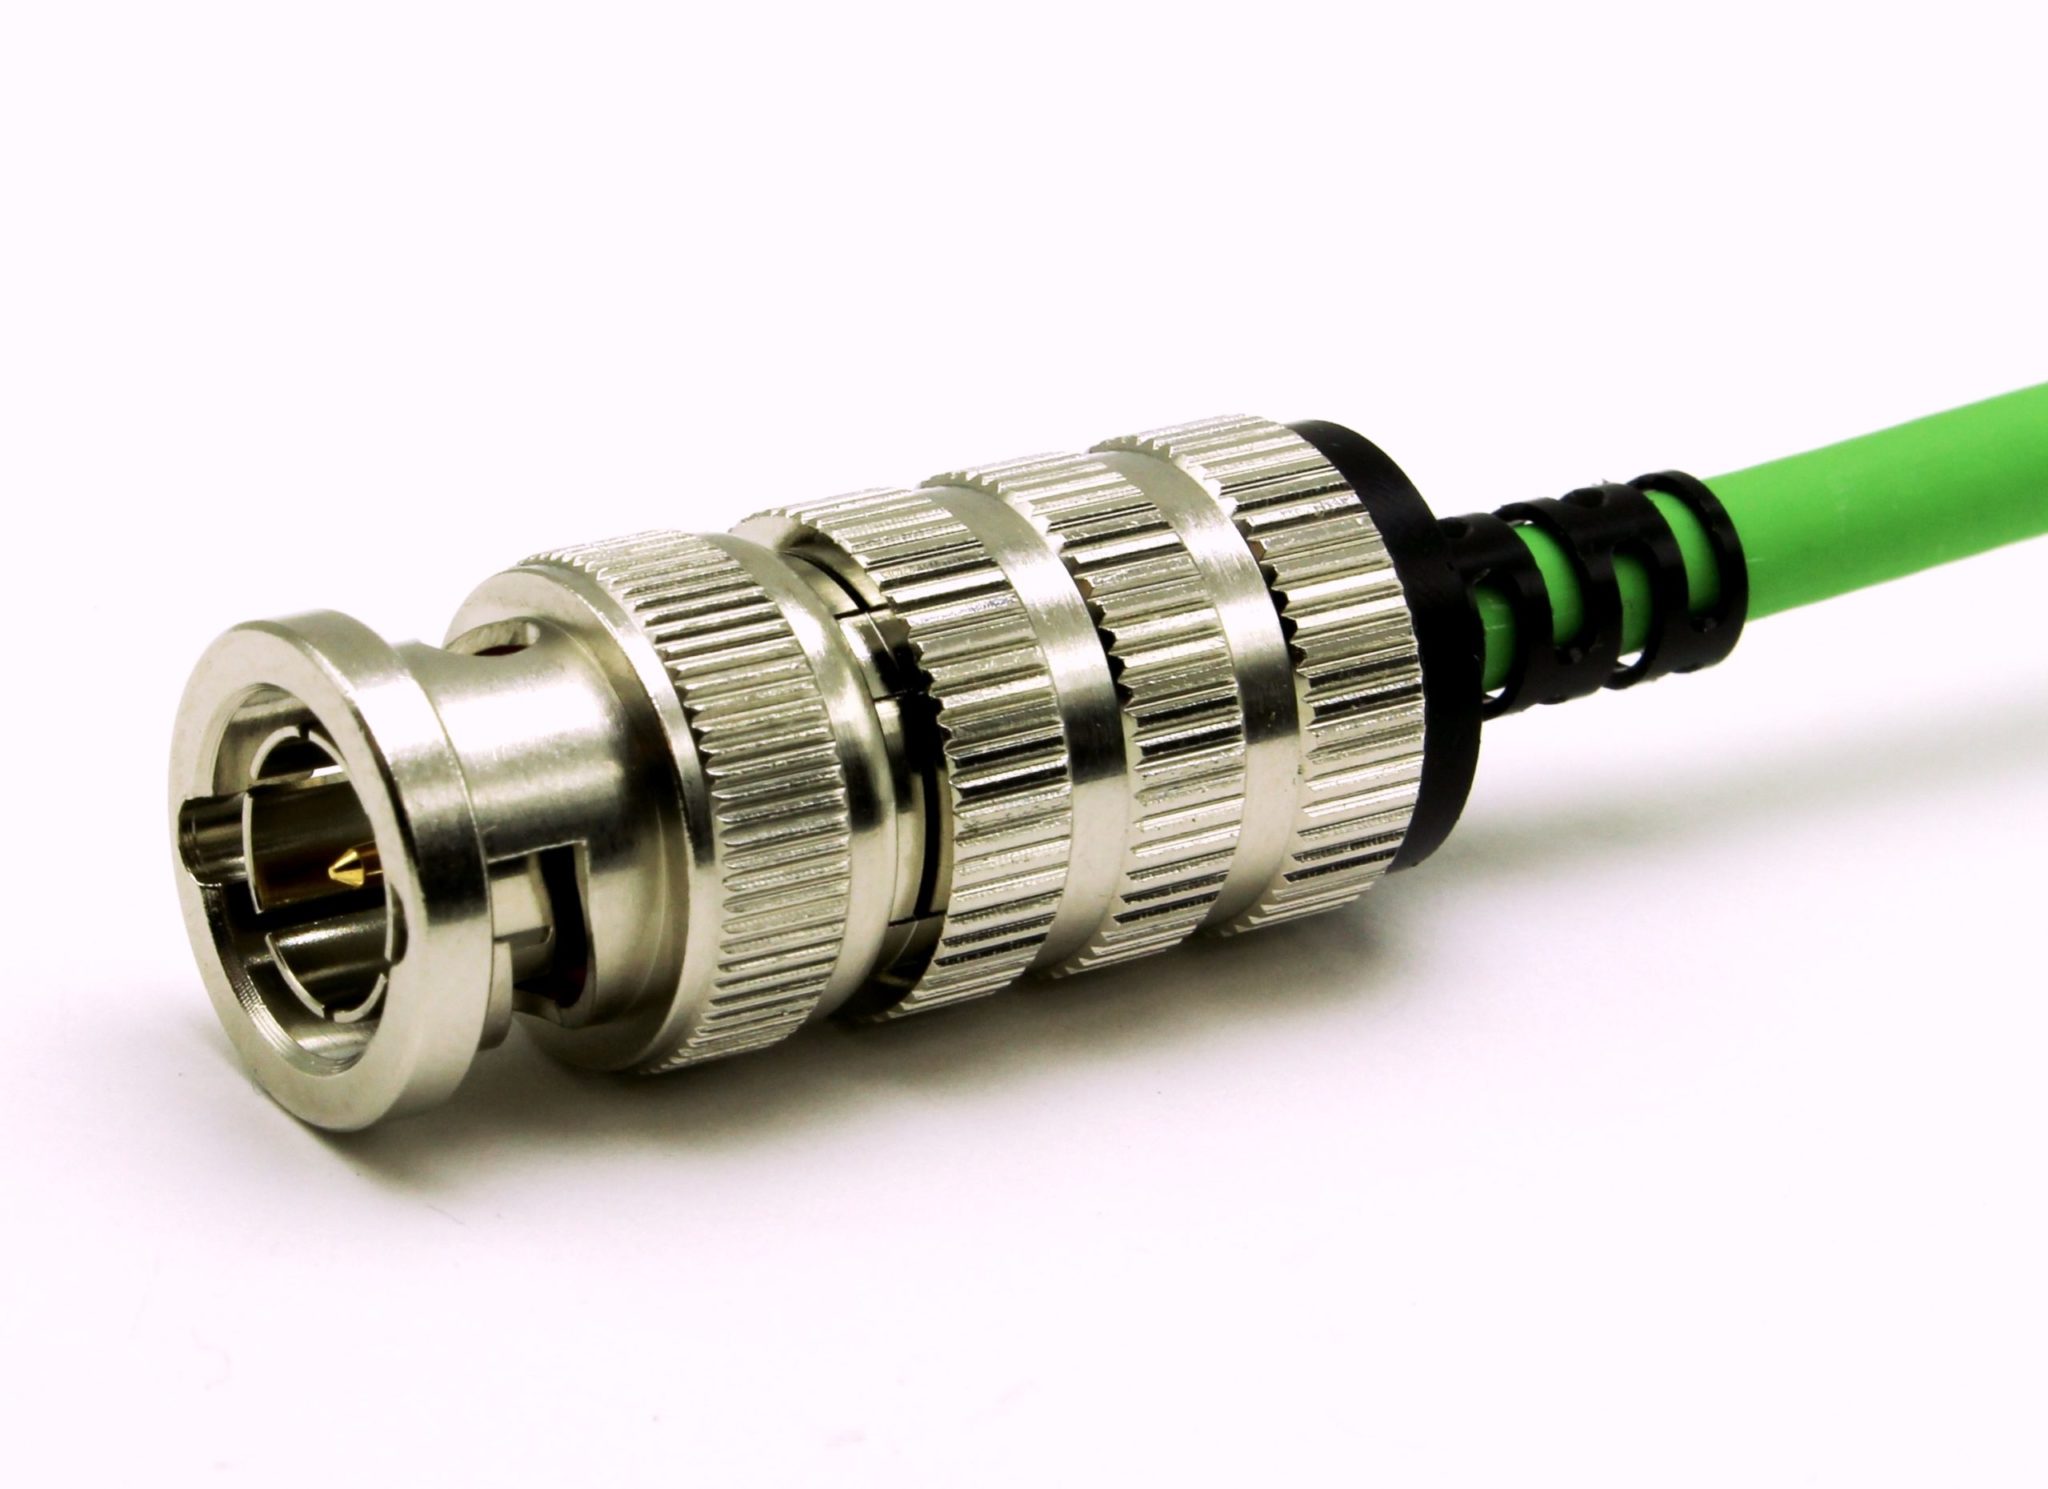 COAX Connectors’ High-Performance, Easy-Grip, 75Ω BNC Straight-Crimp Plugs